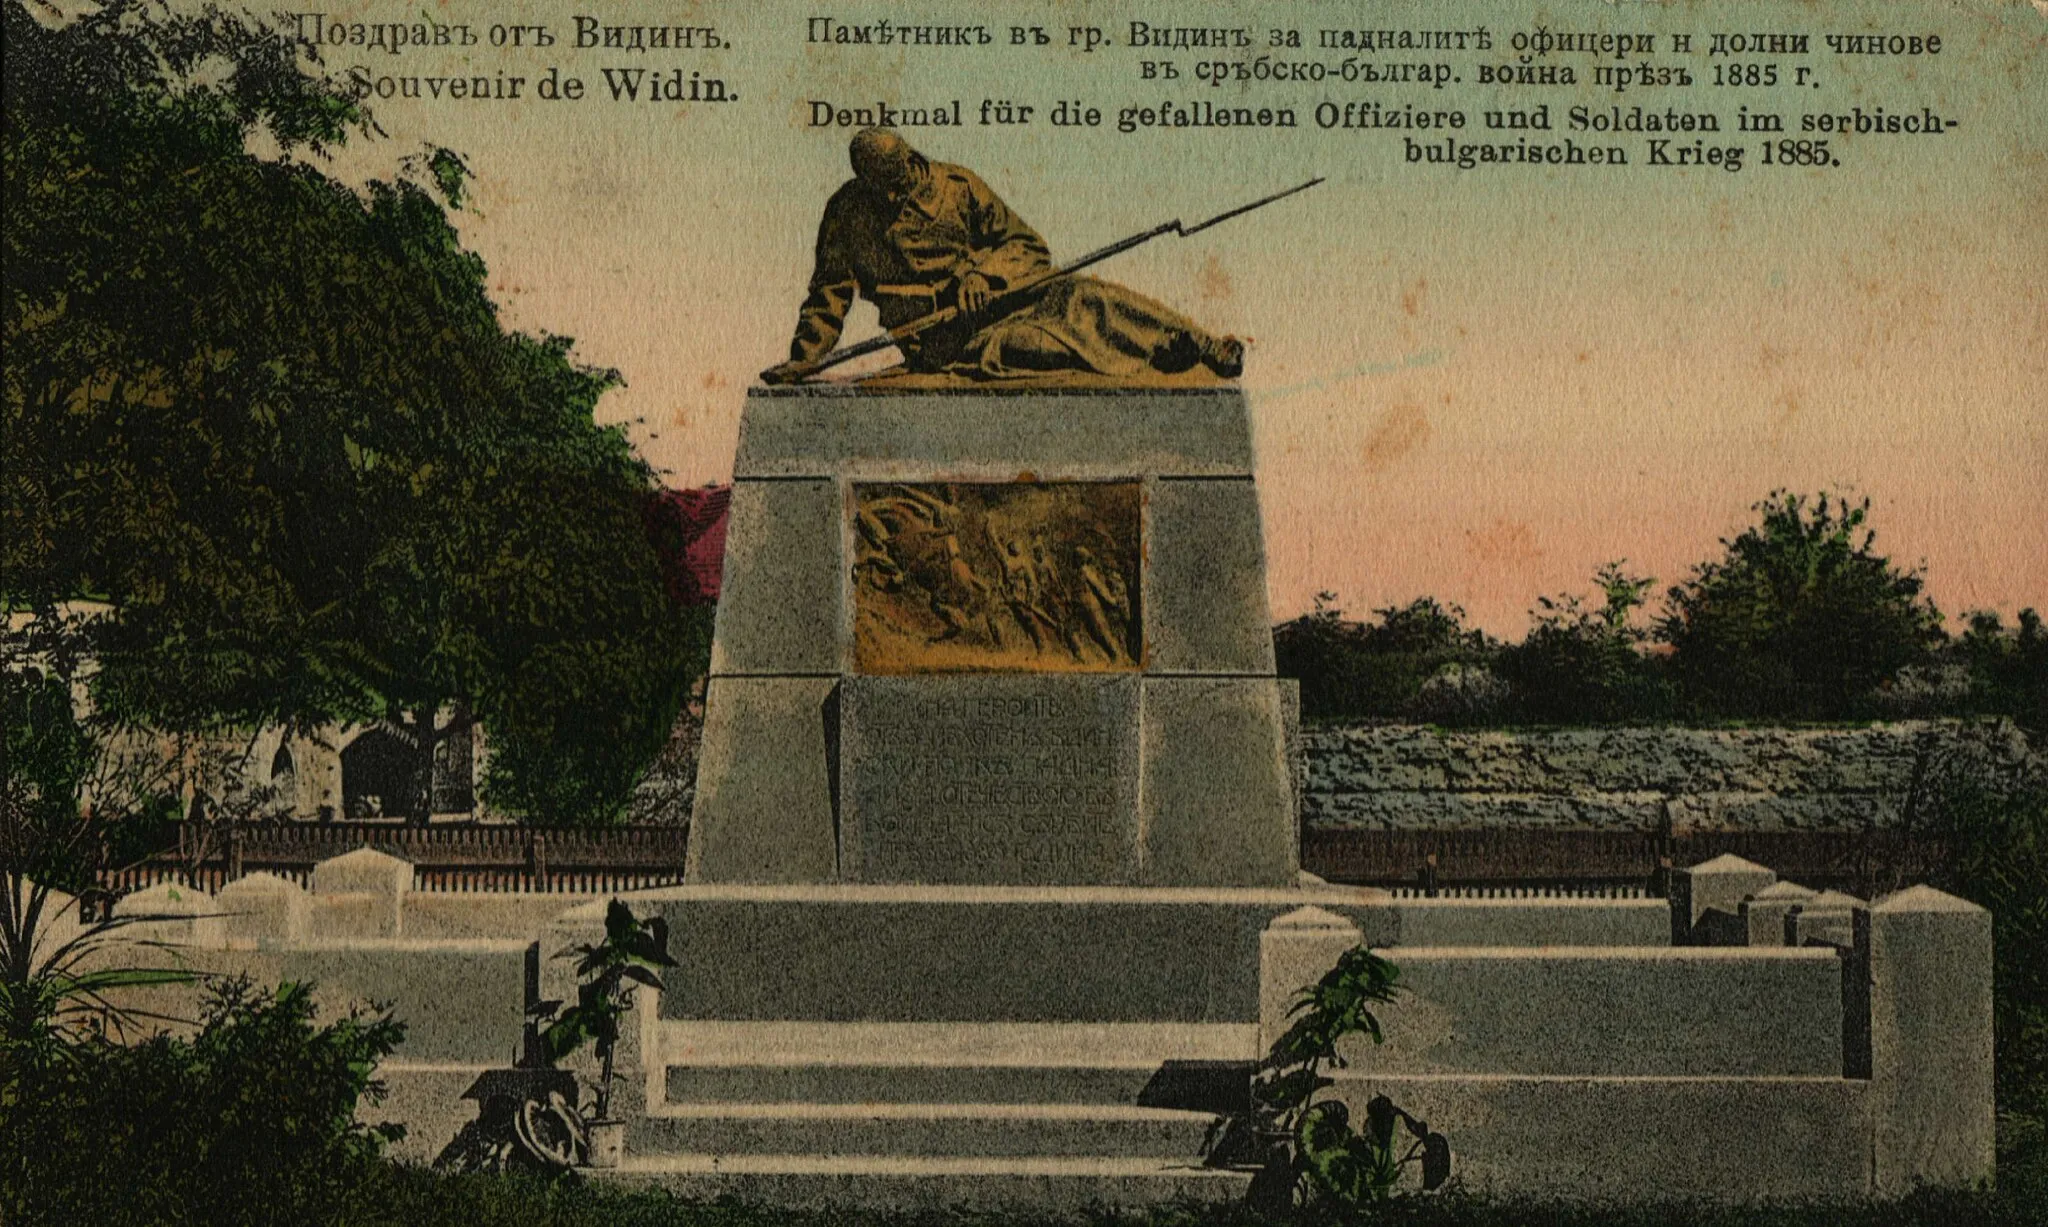 Photo showing: Memorial of the Fallen in the Serbo-Bulgarian War, Vidin, Bulgaria